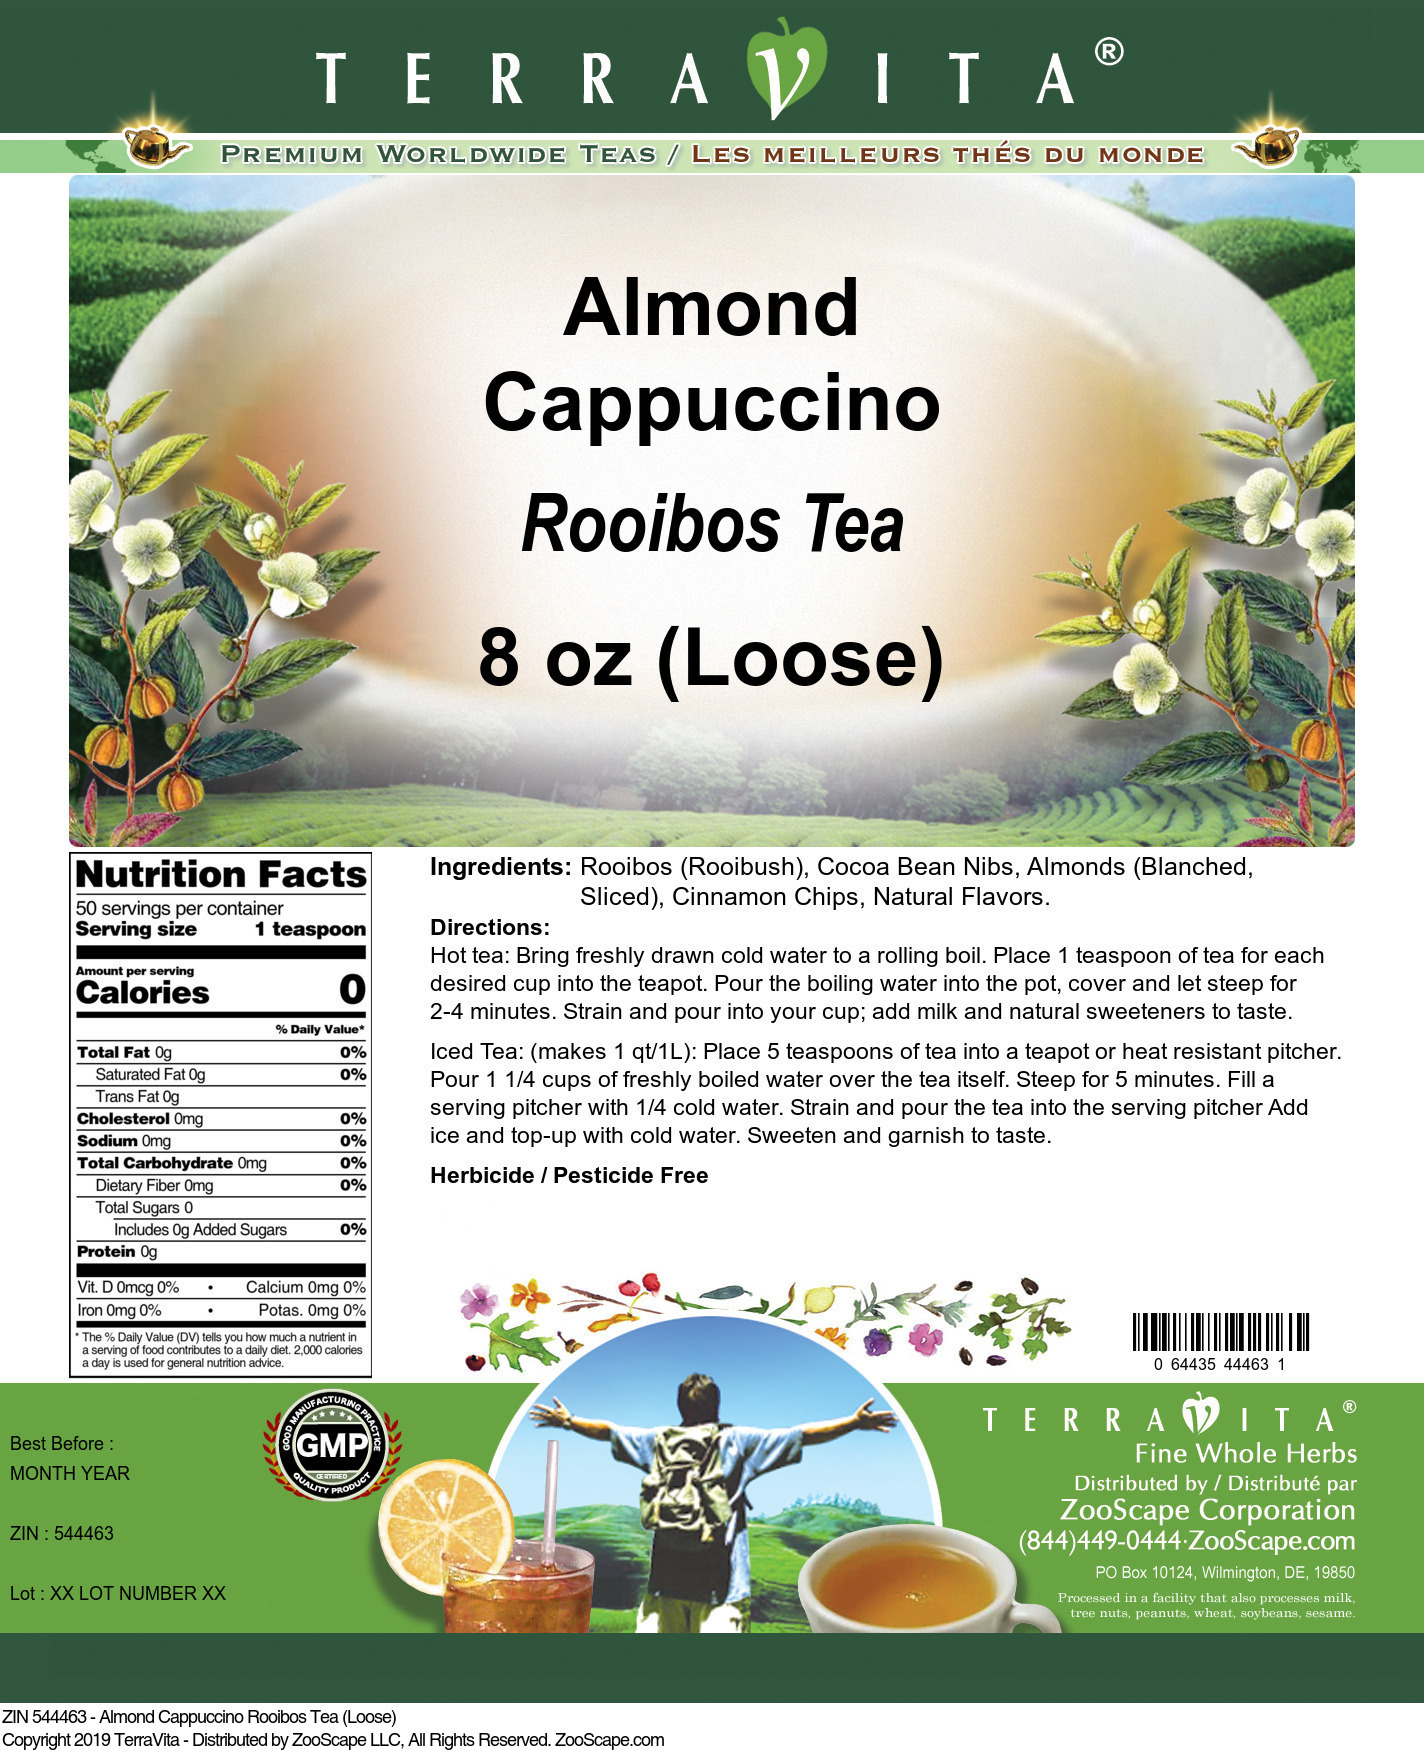 Almond Cappuccino Rooibos Tea (Loose) - Label